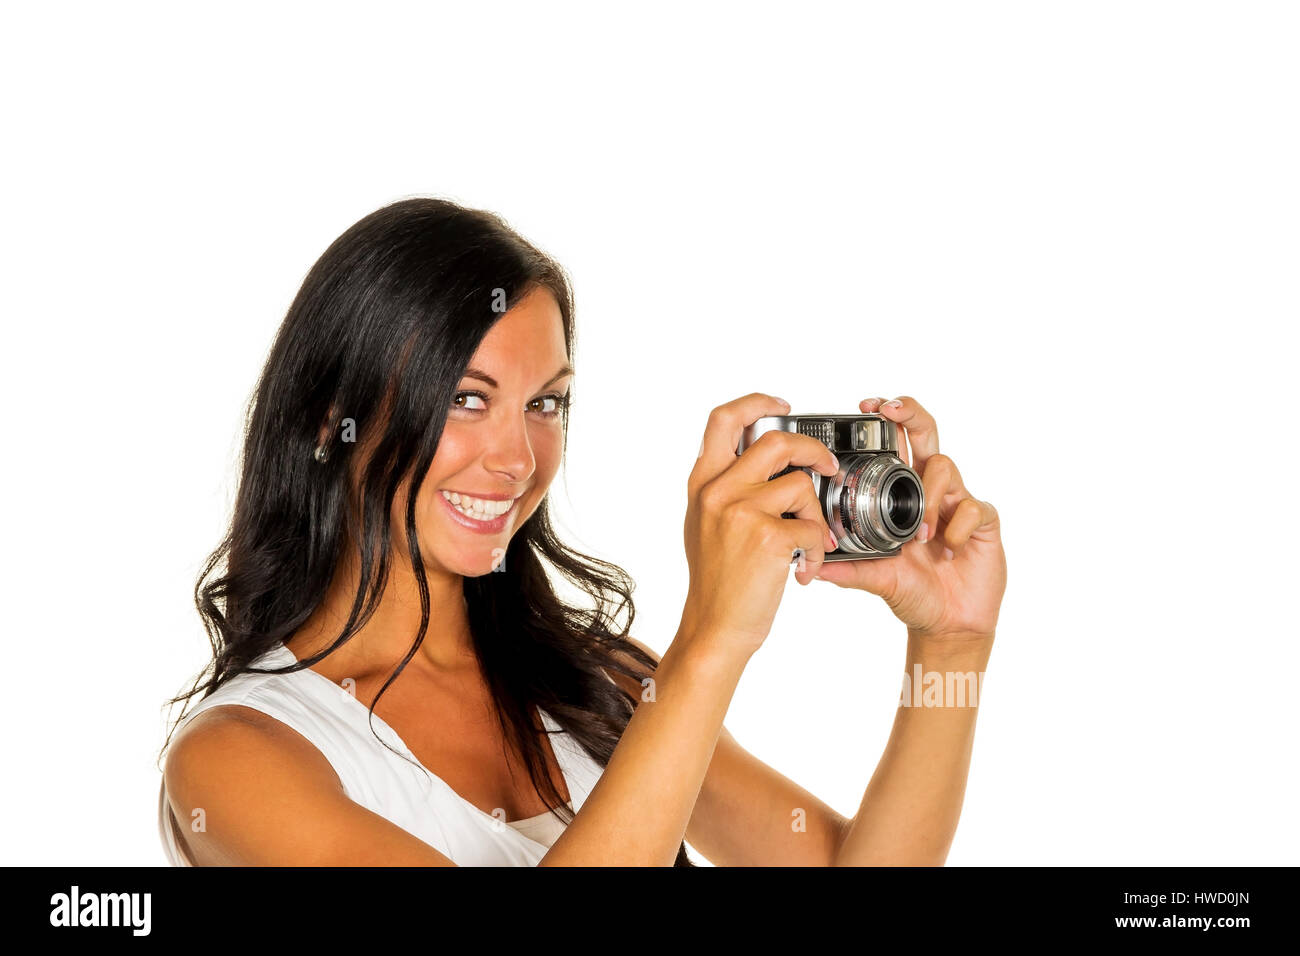 Una giovane donna prende la foto di una fotocamera con un retrò, Eine junge Frau fotografiert mit einer retrò Kamera Foto Stock